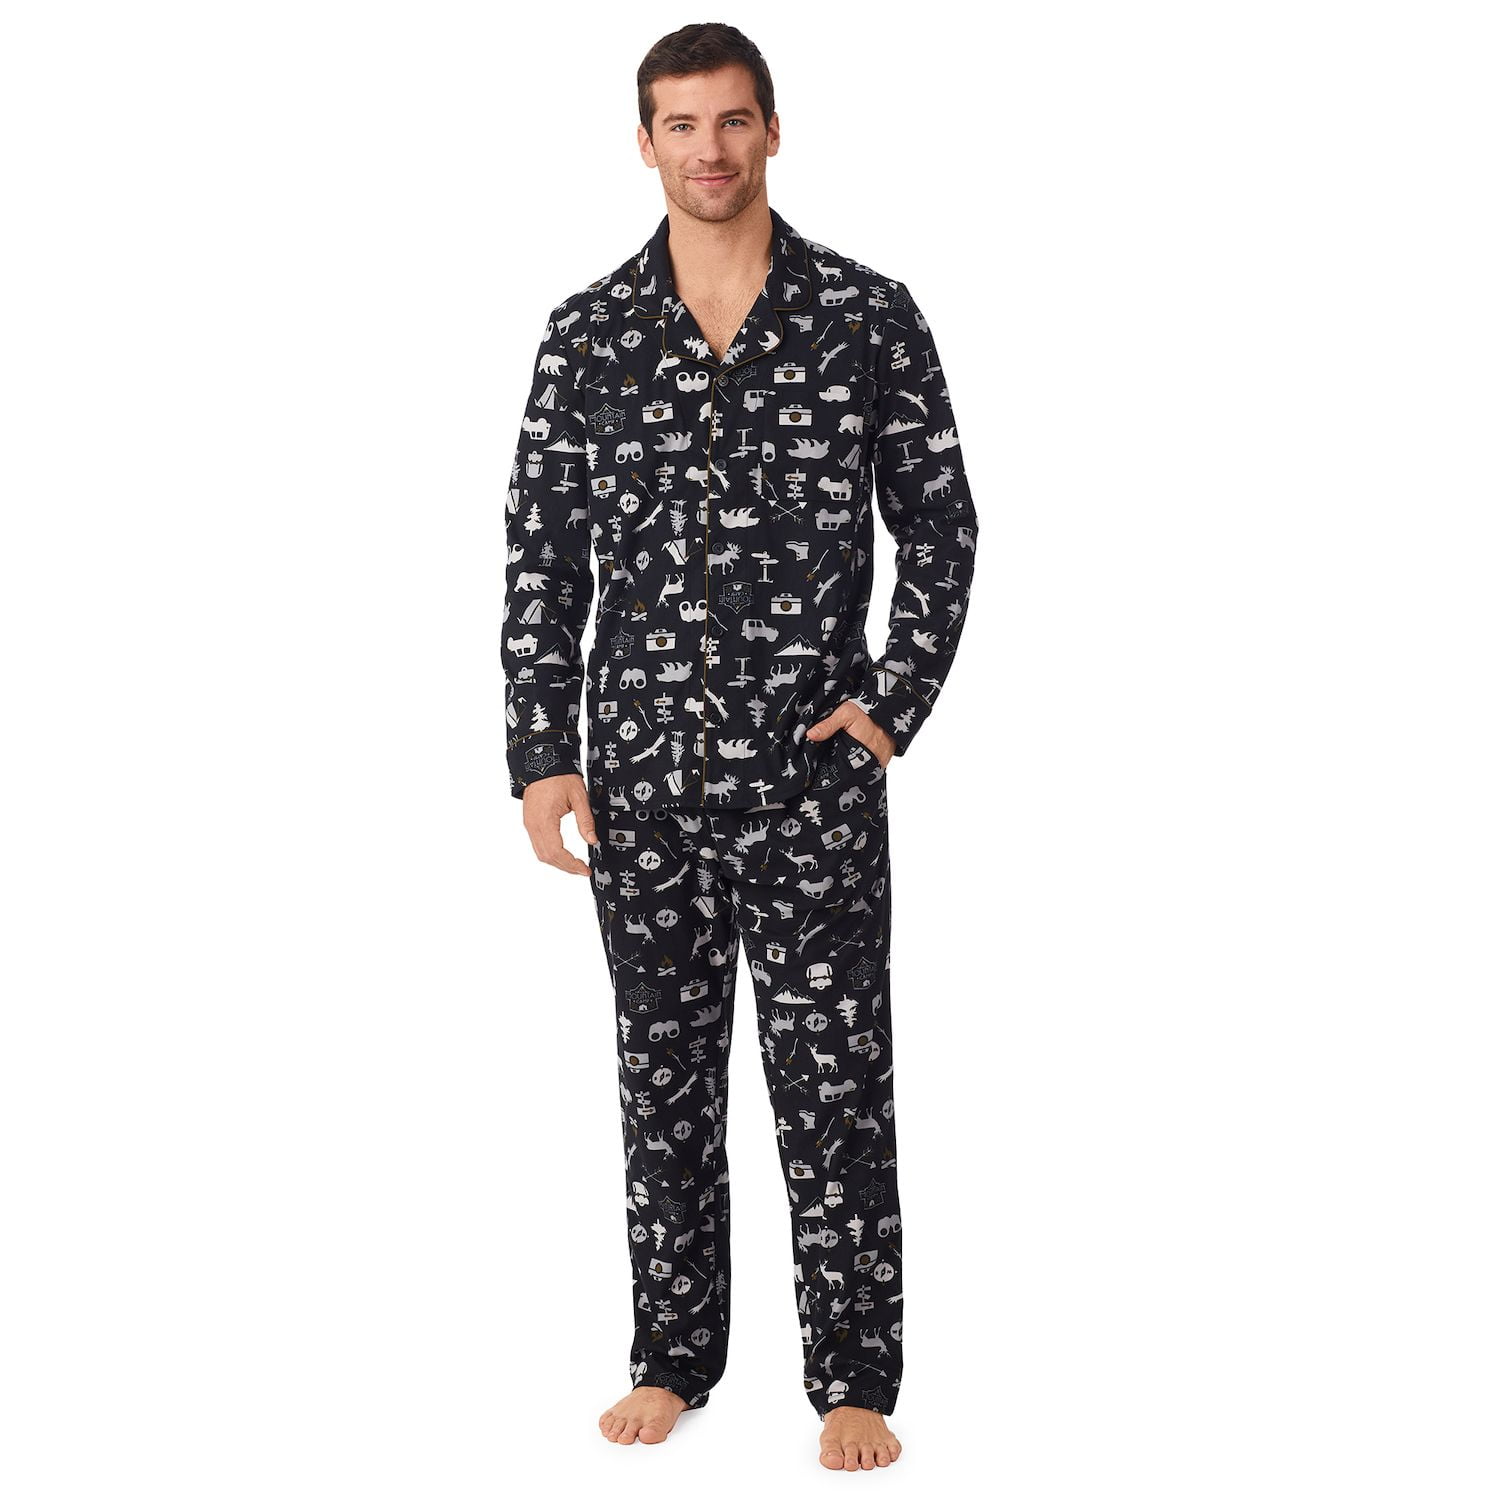 Cuddl Duds Pajama Sets On Sale